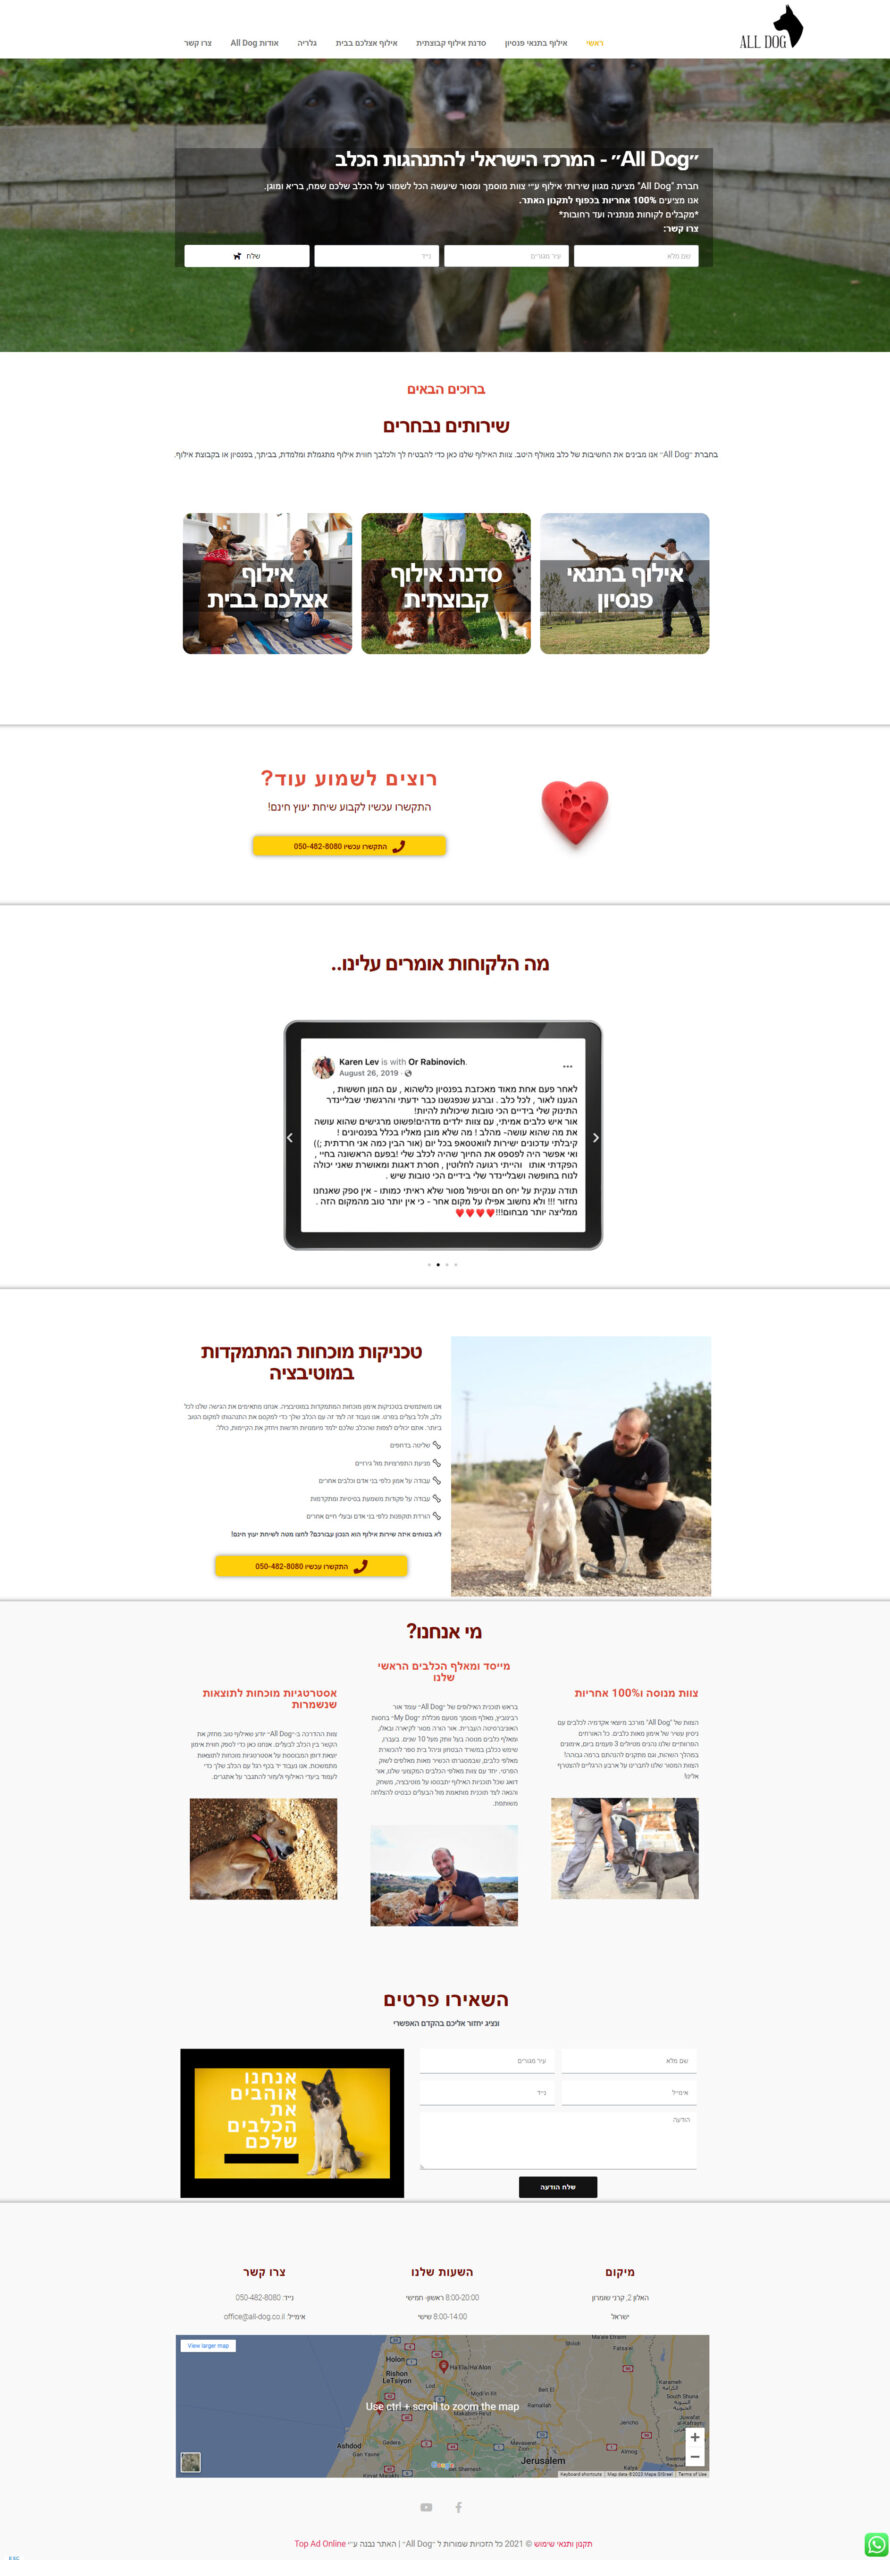 Dog Trainer Custom Website Design